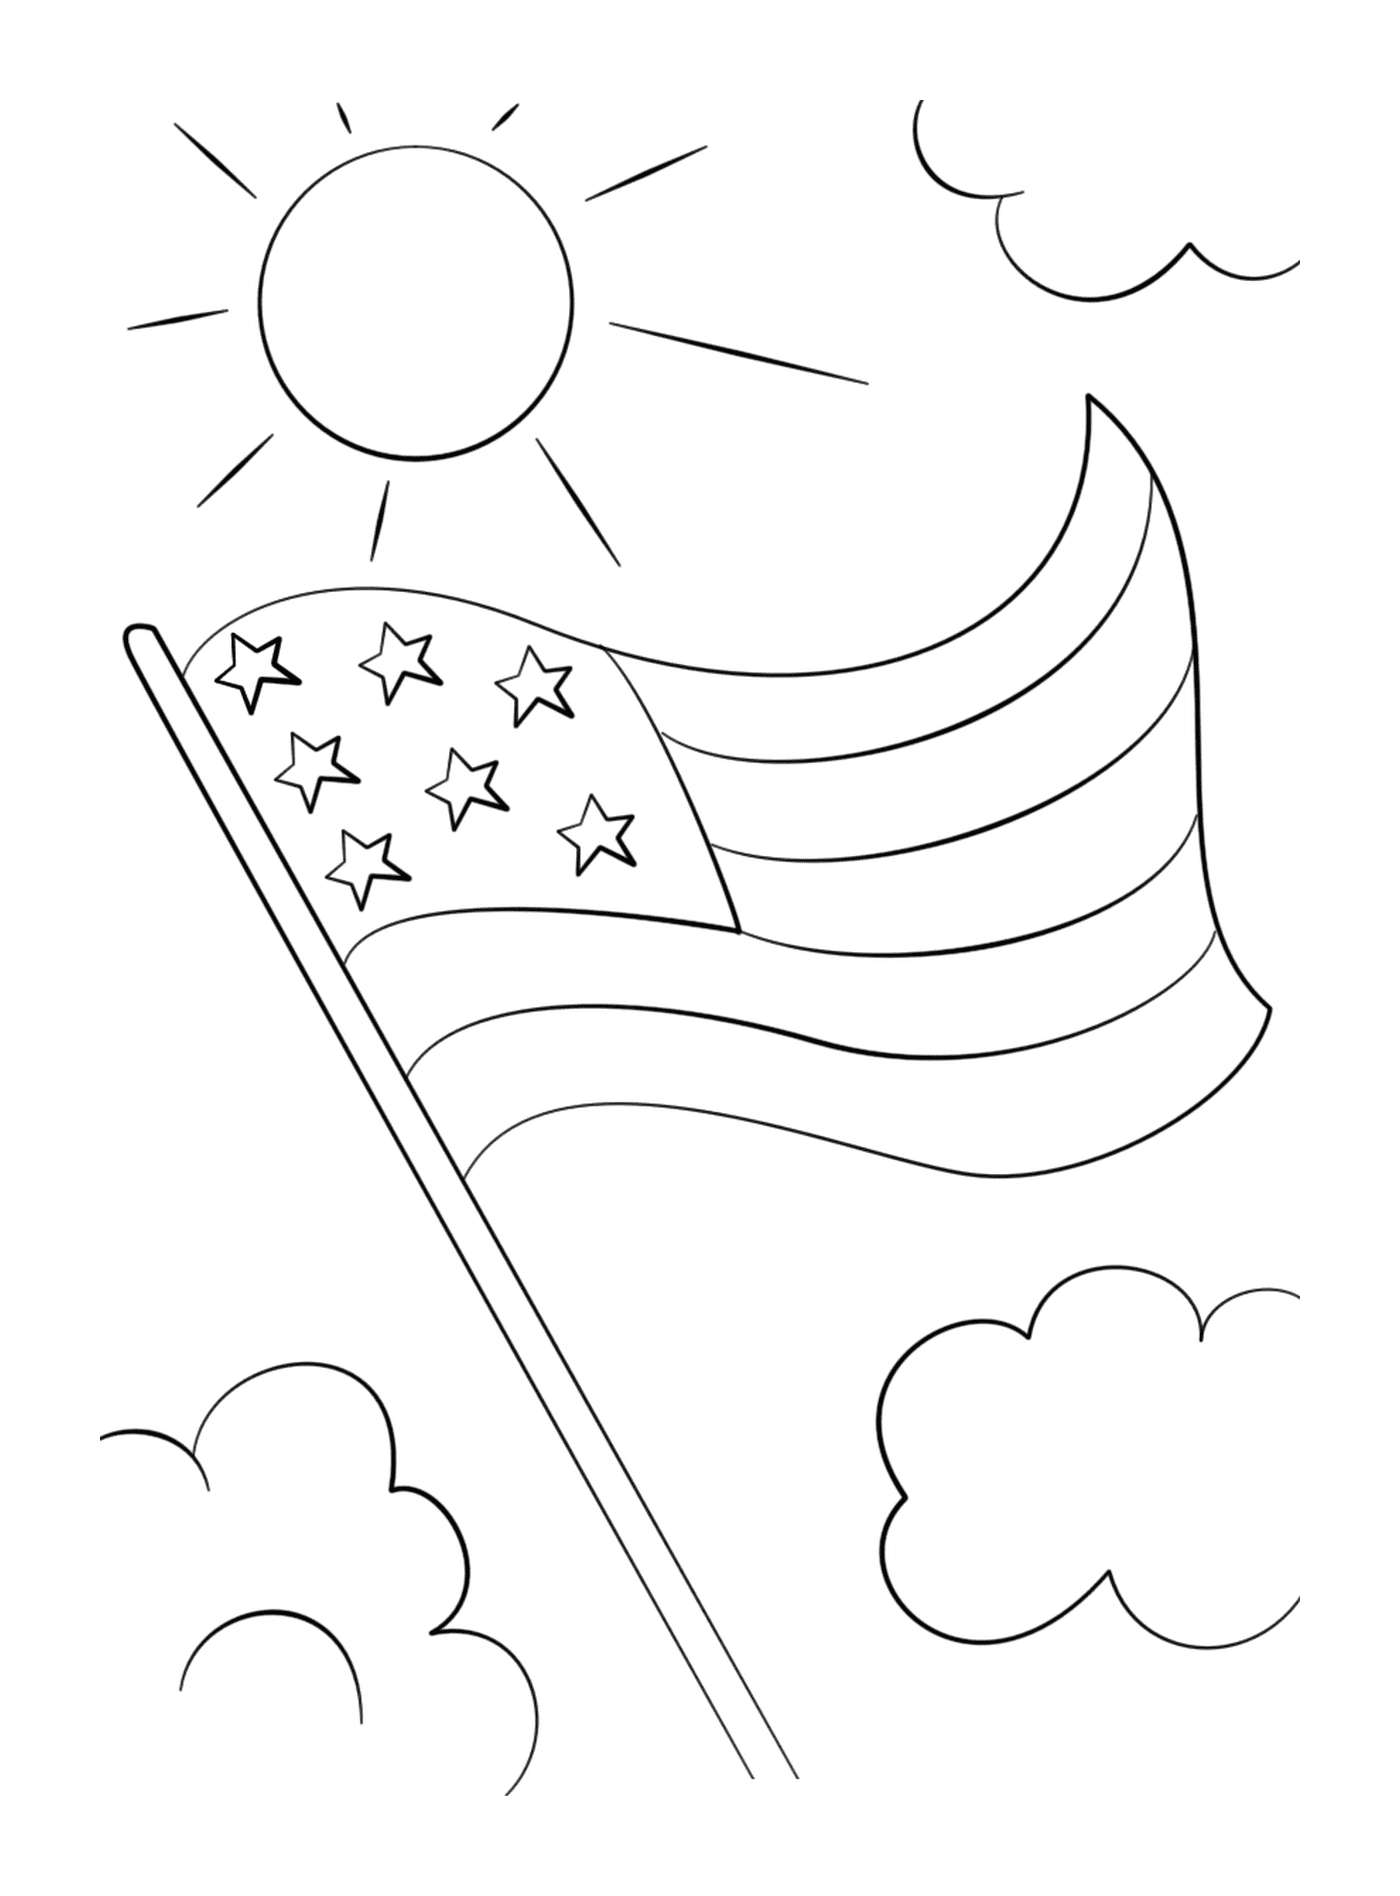  Американский флаг со звездами, плавающими в небе 